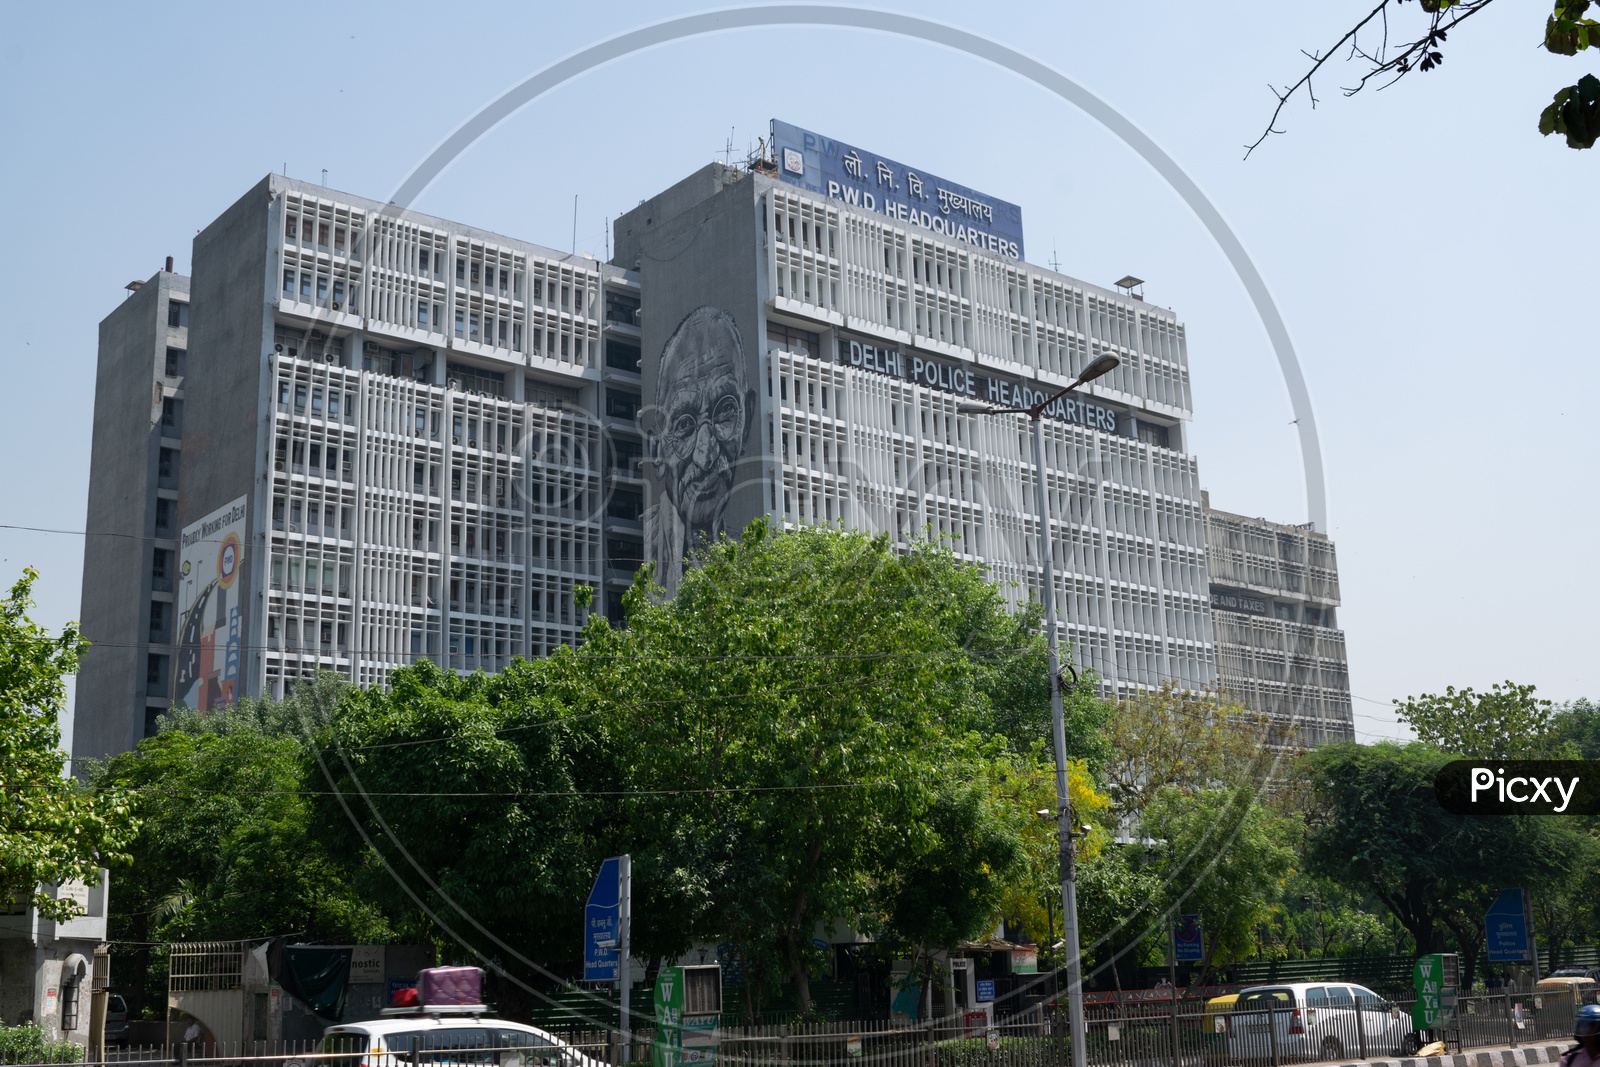 P.W.D Headquarters, Delhi Police Headquarters